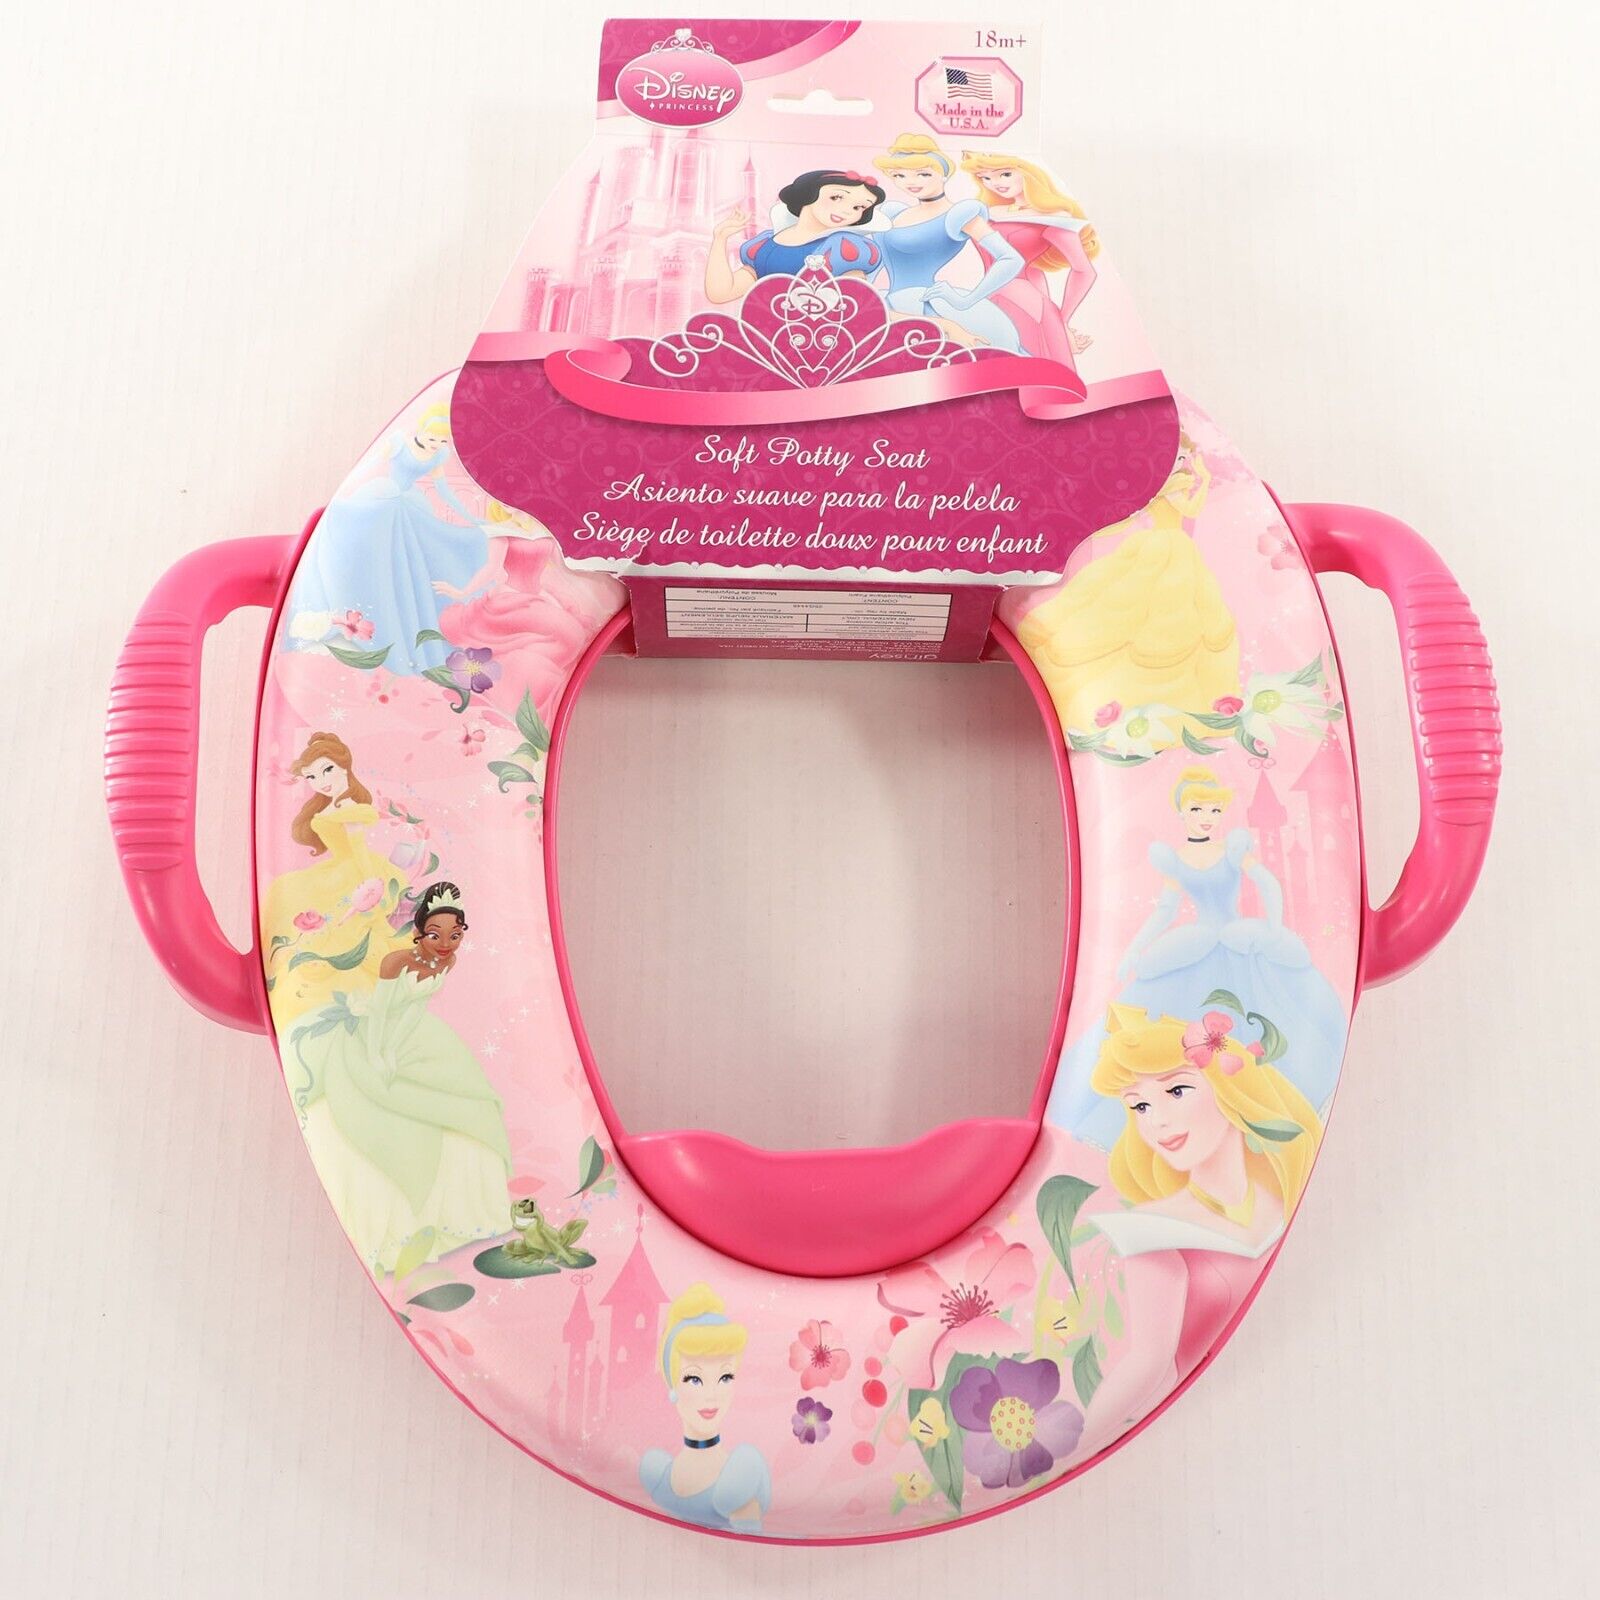 Disney Princess Toddler Soft Potty Seat Pink Handles Padded To...